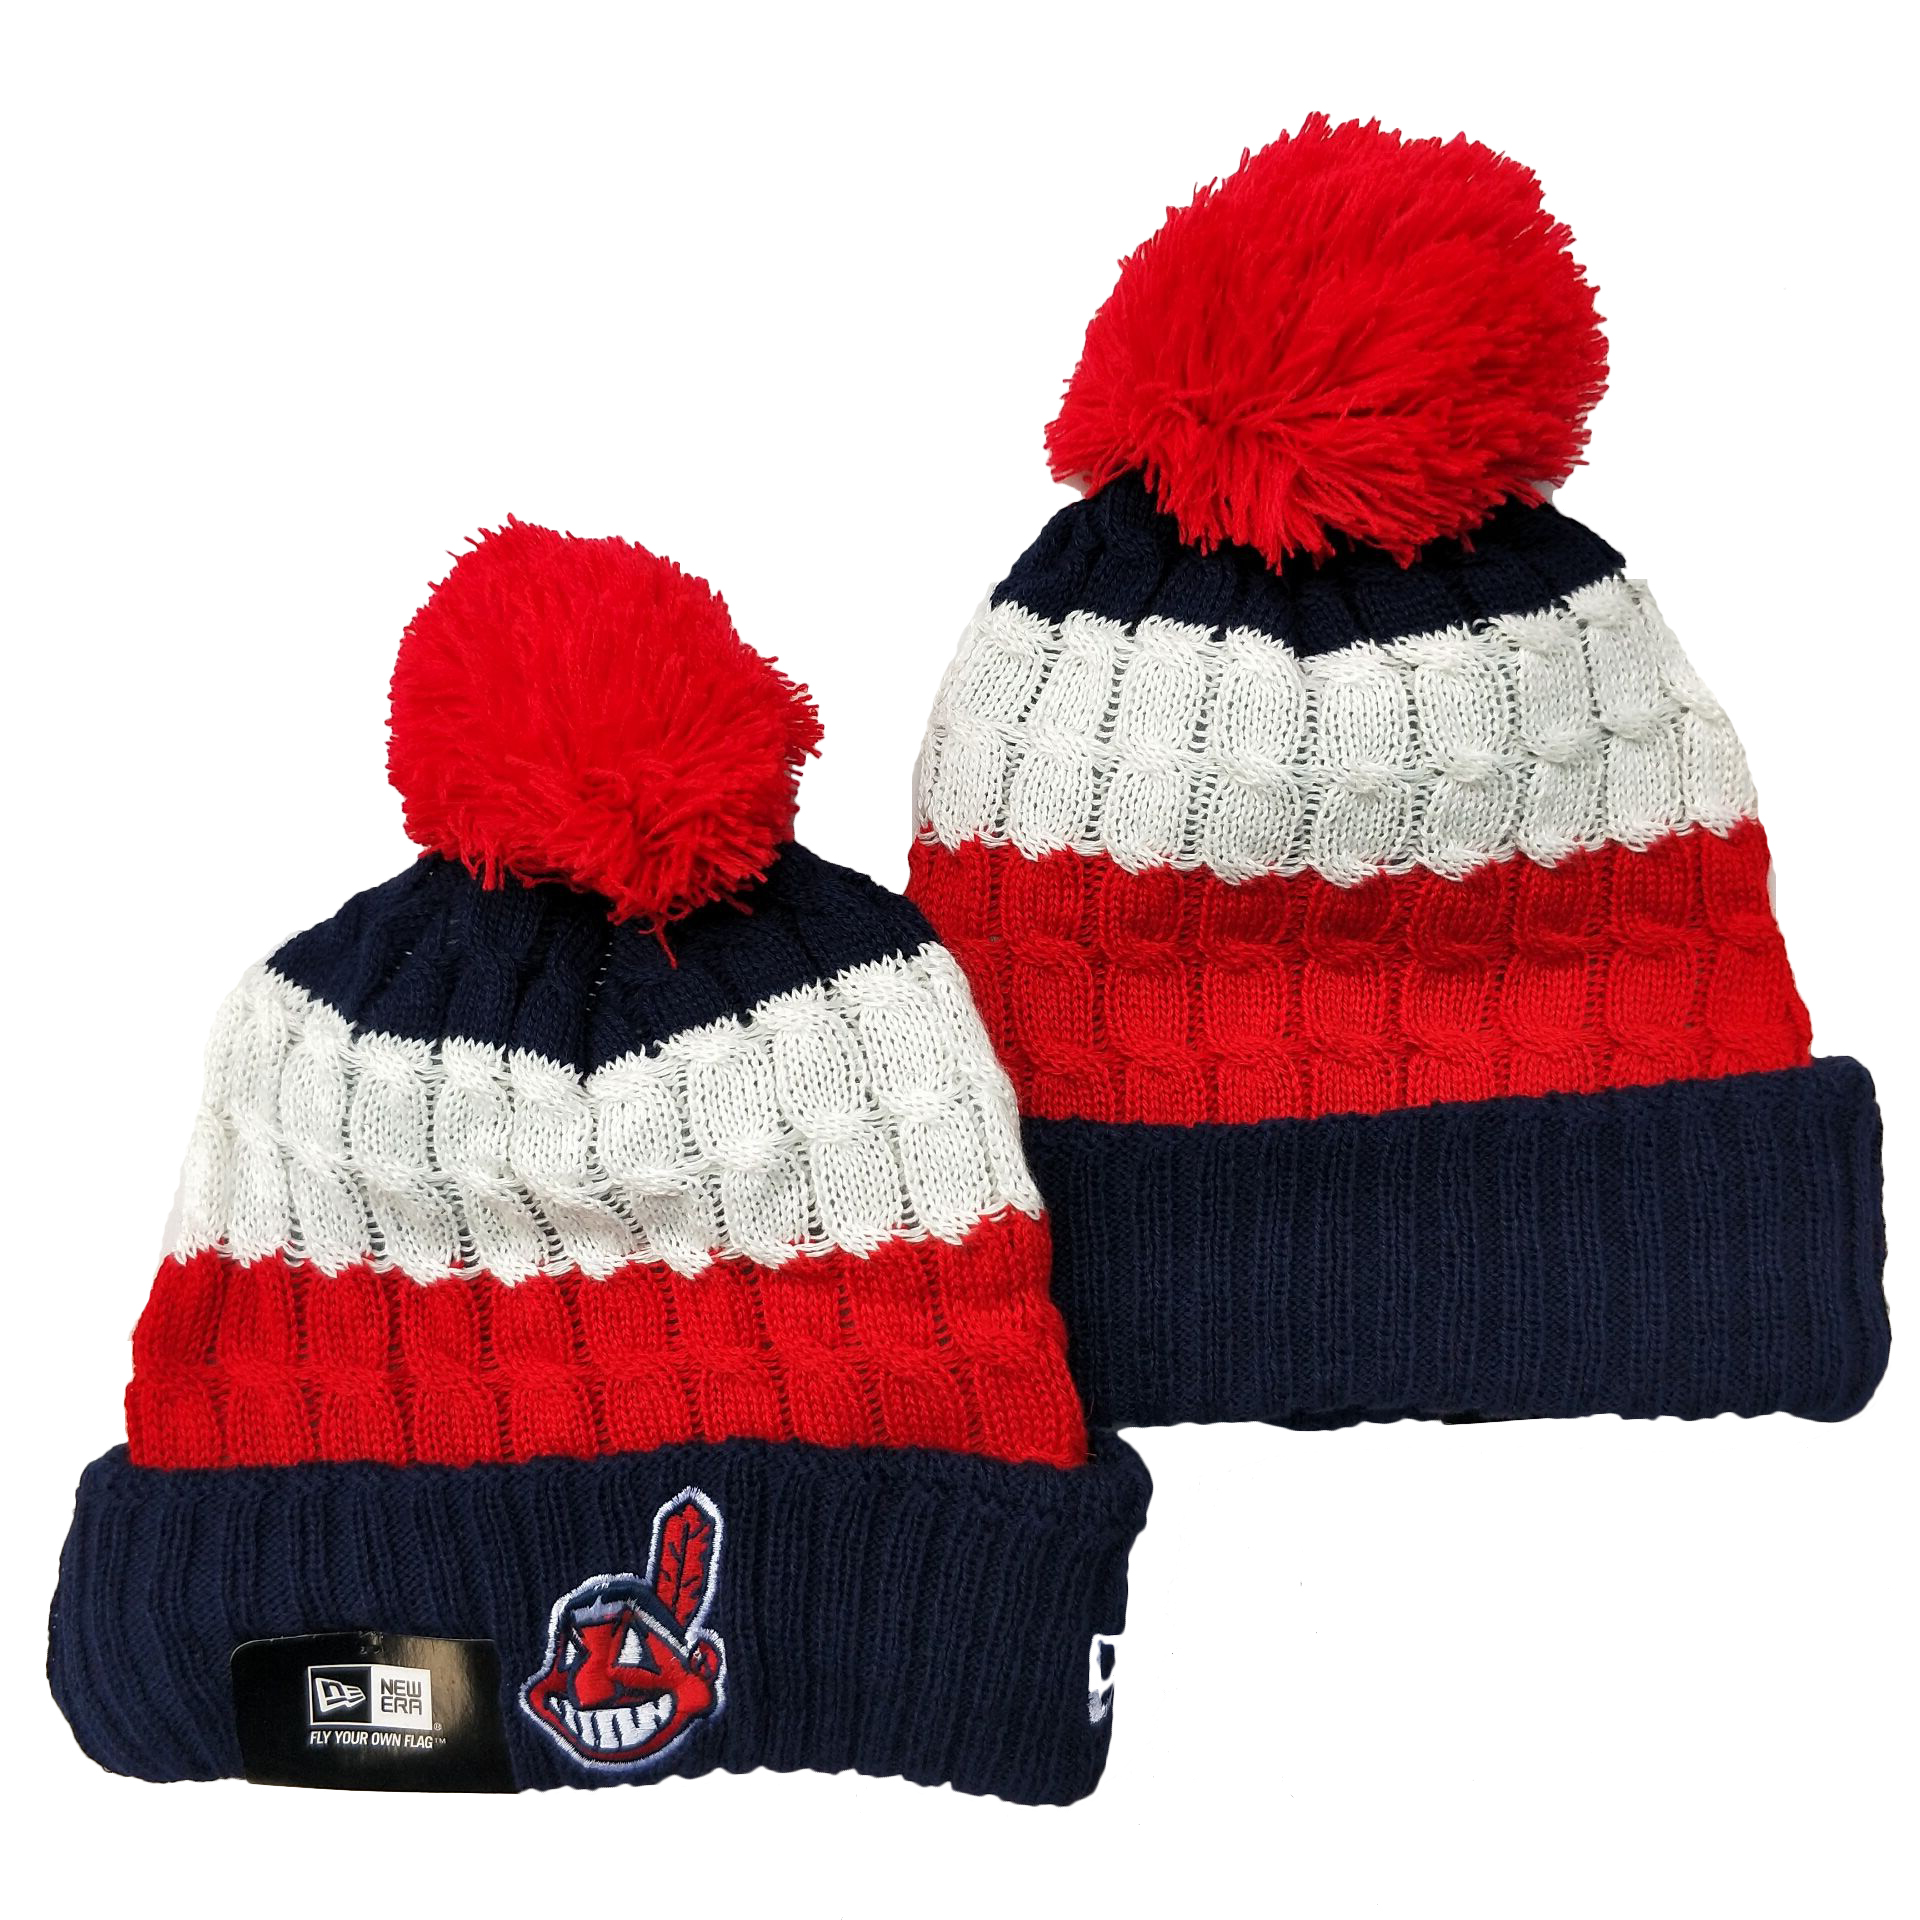 Cleveland Indians Knit Hats 002